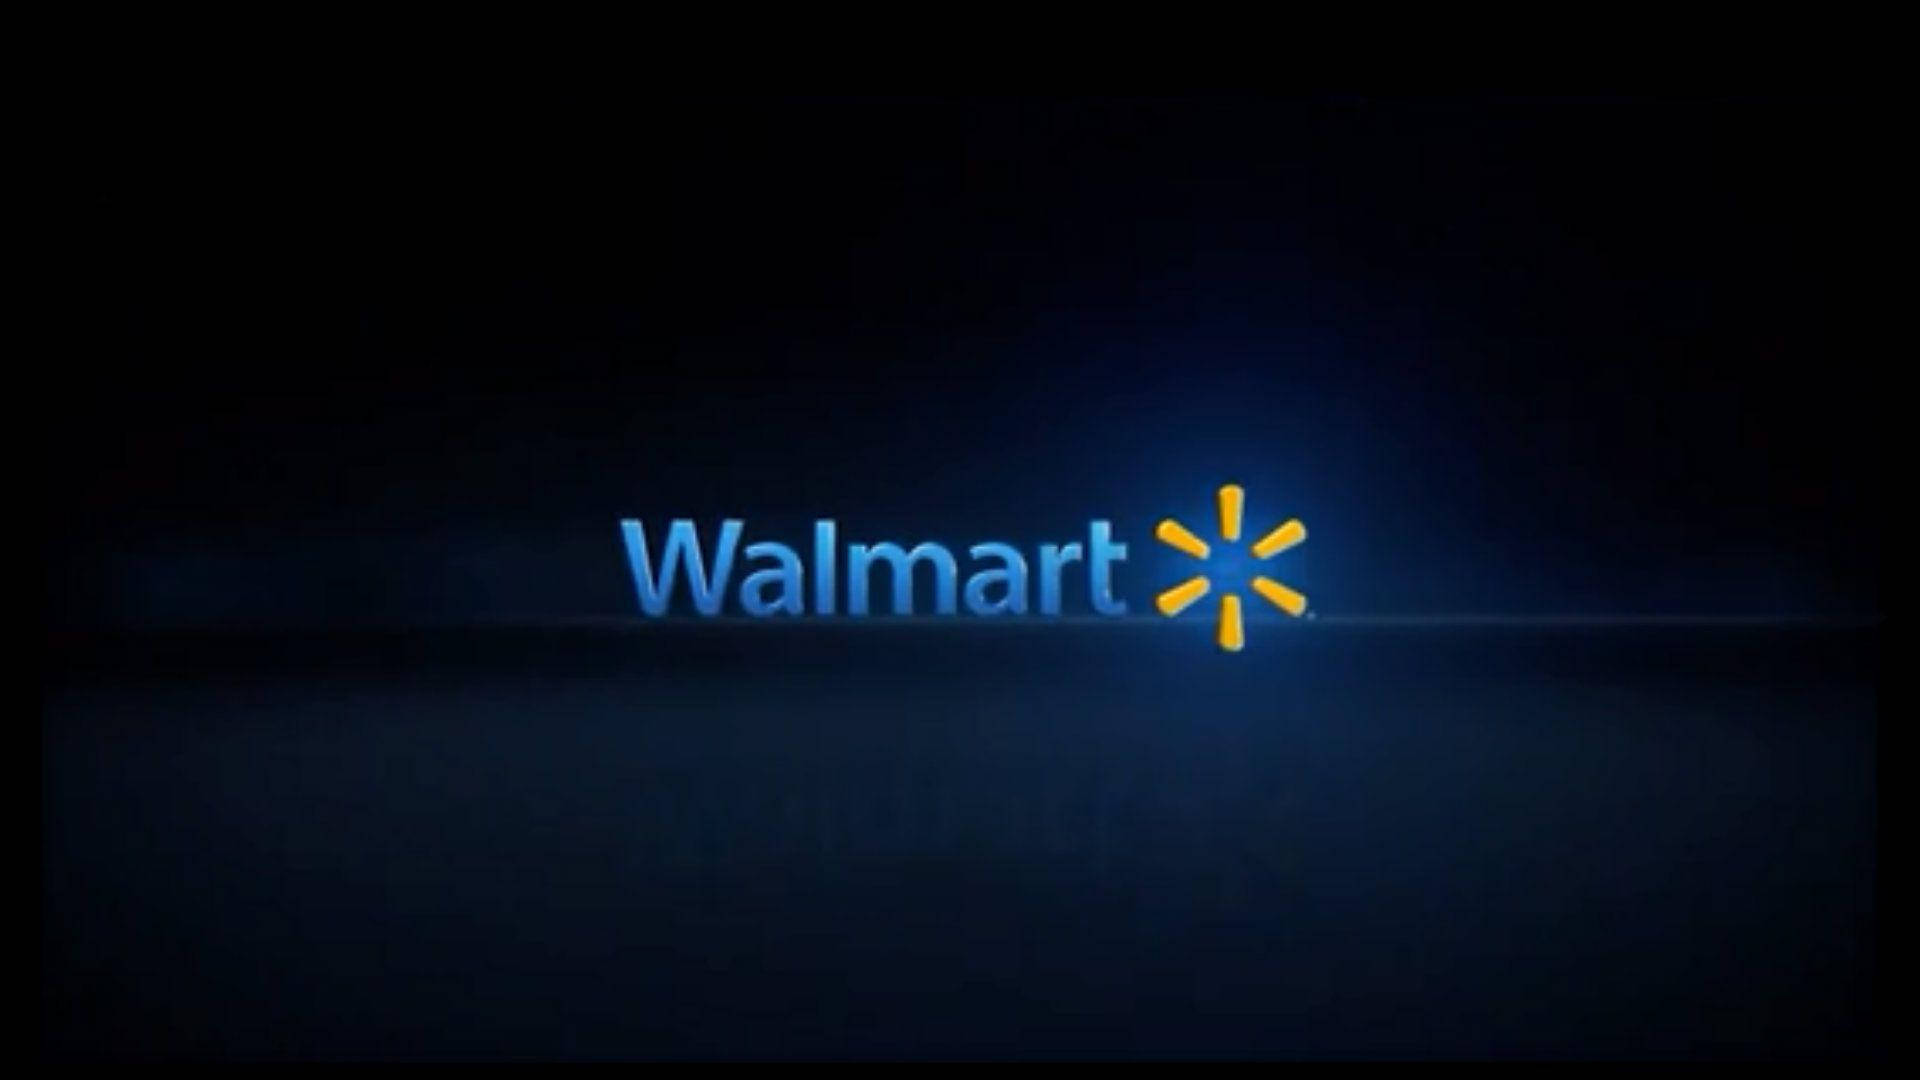 Sophisticated Walmart logo wallpaper 